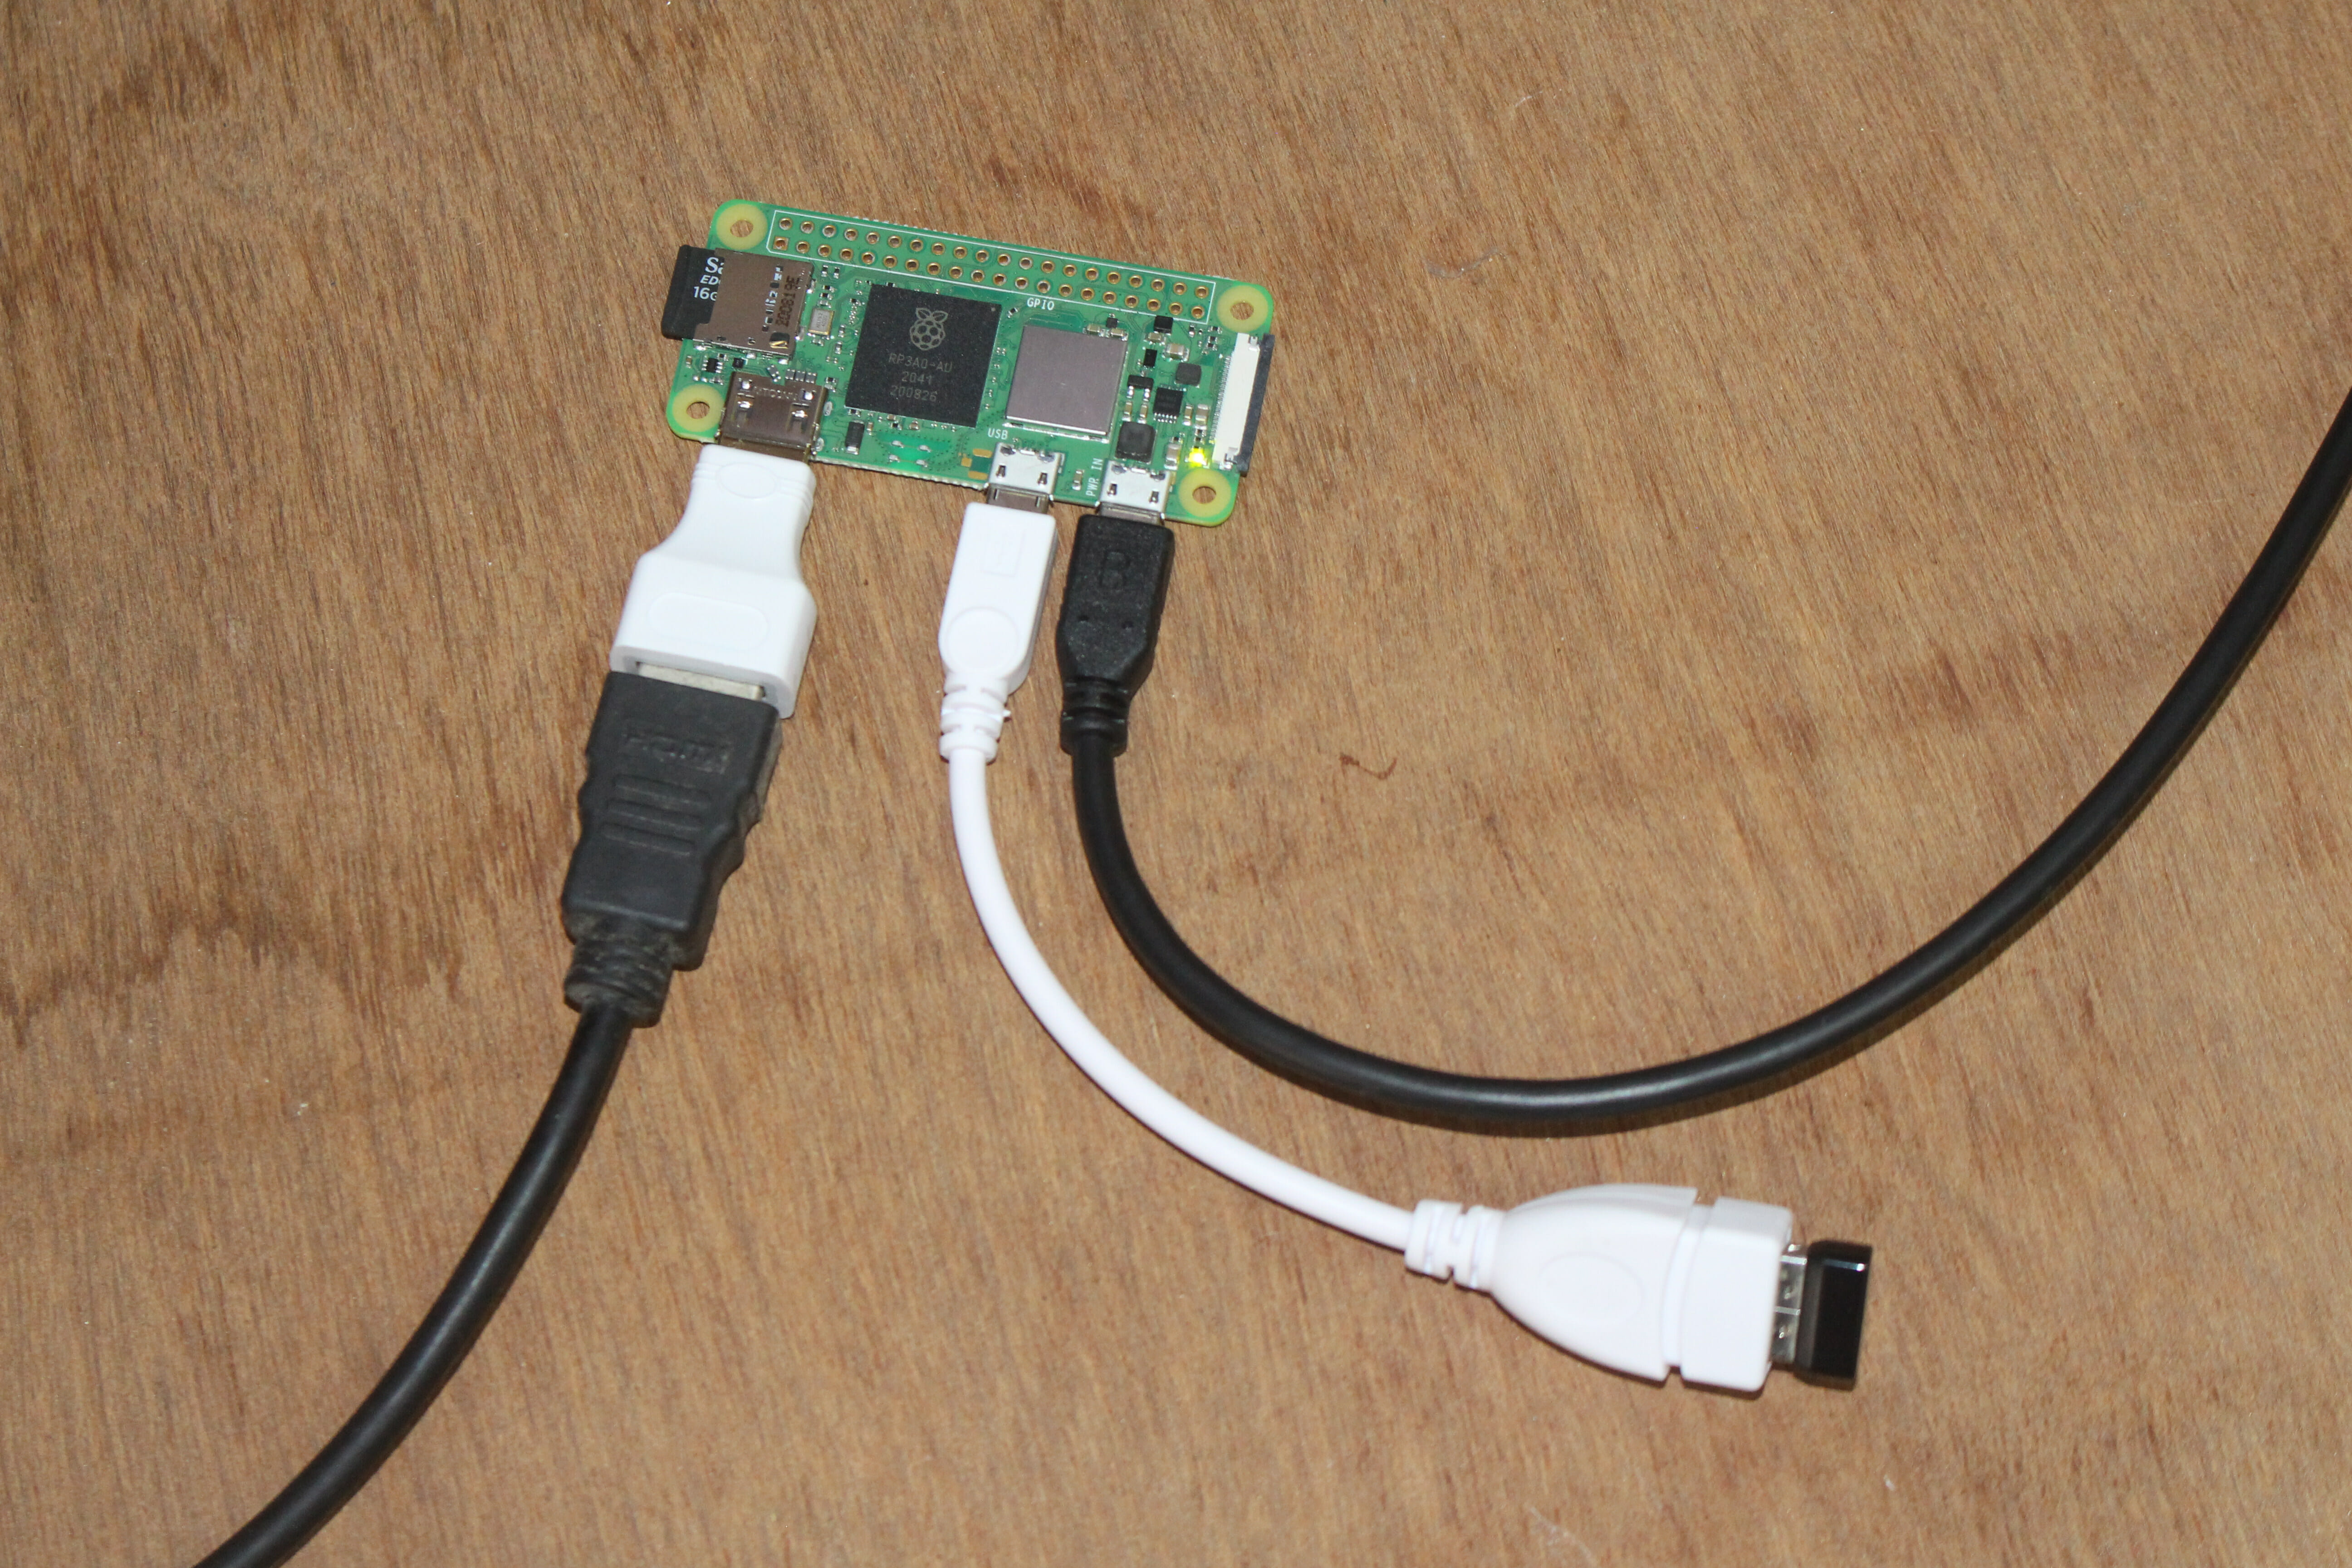 Raspberry Pi Zero 2 W mini review - Benchmarks and thermal